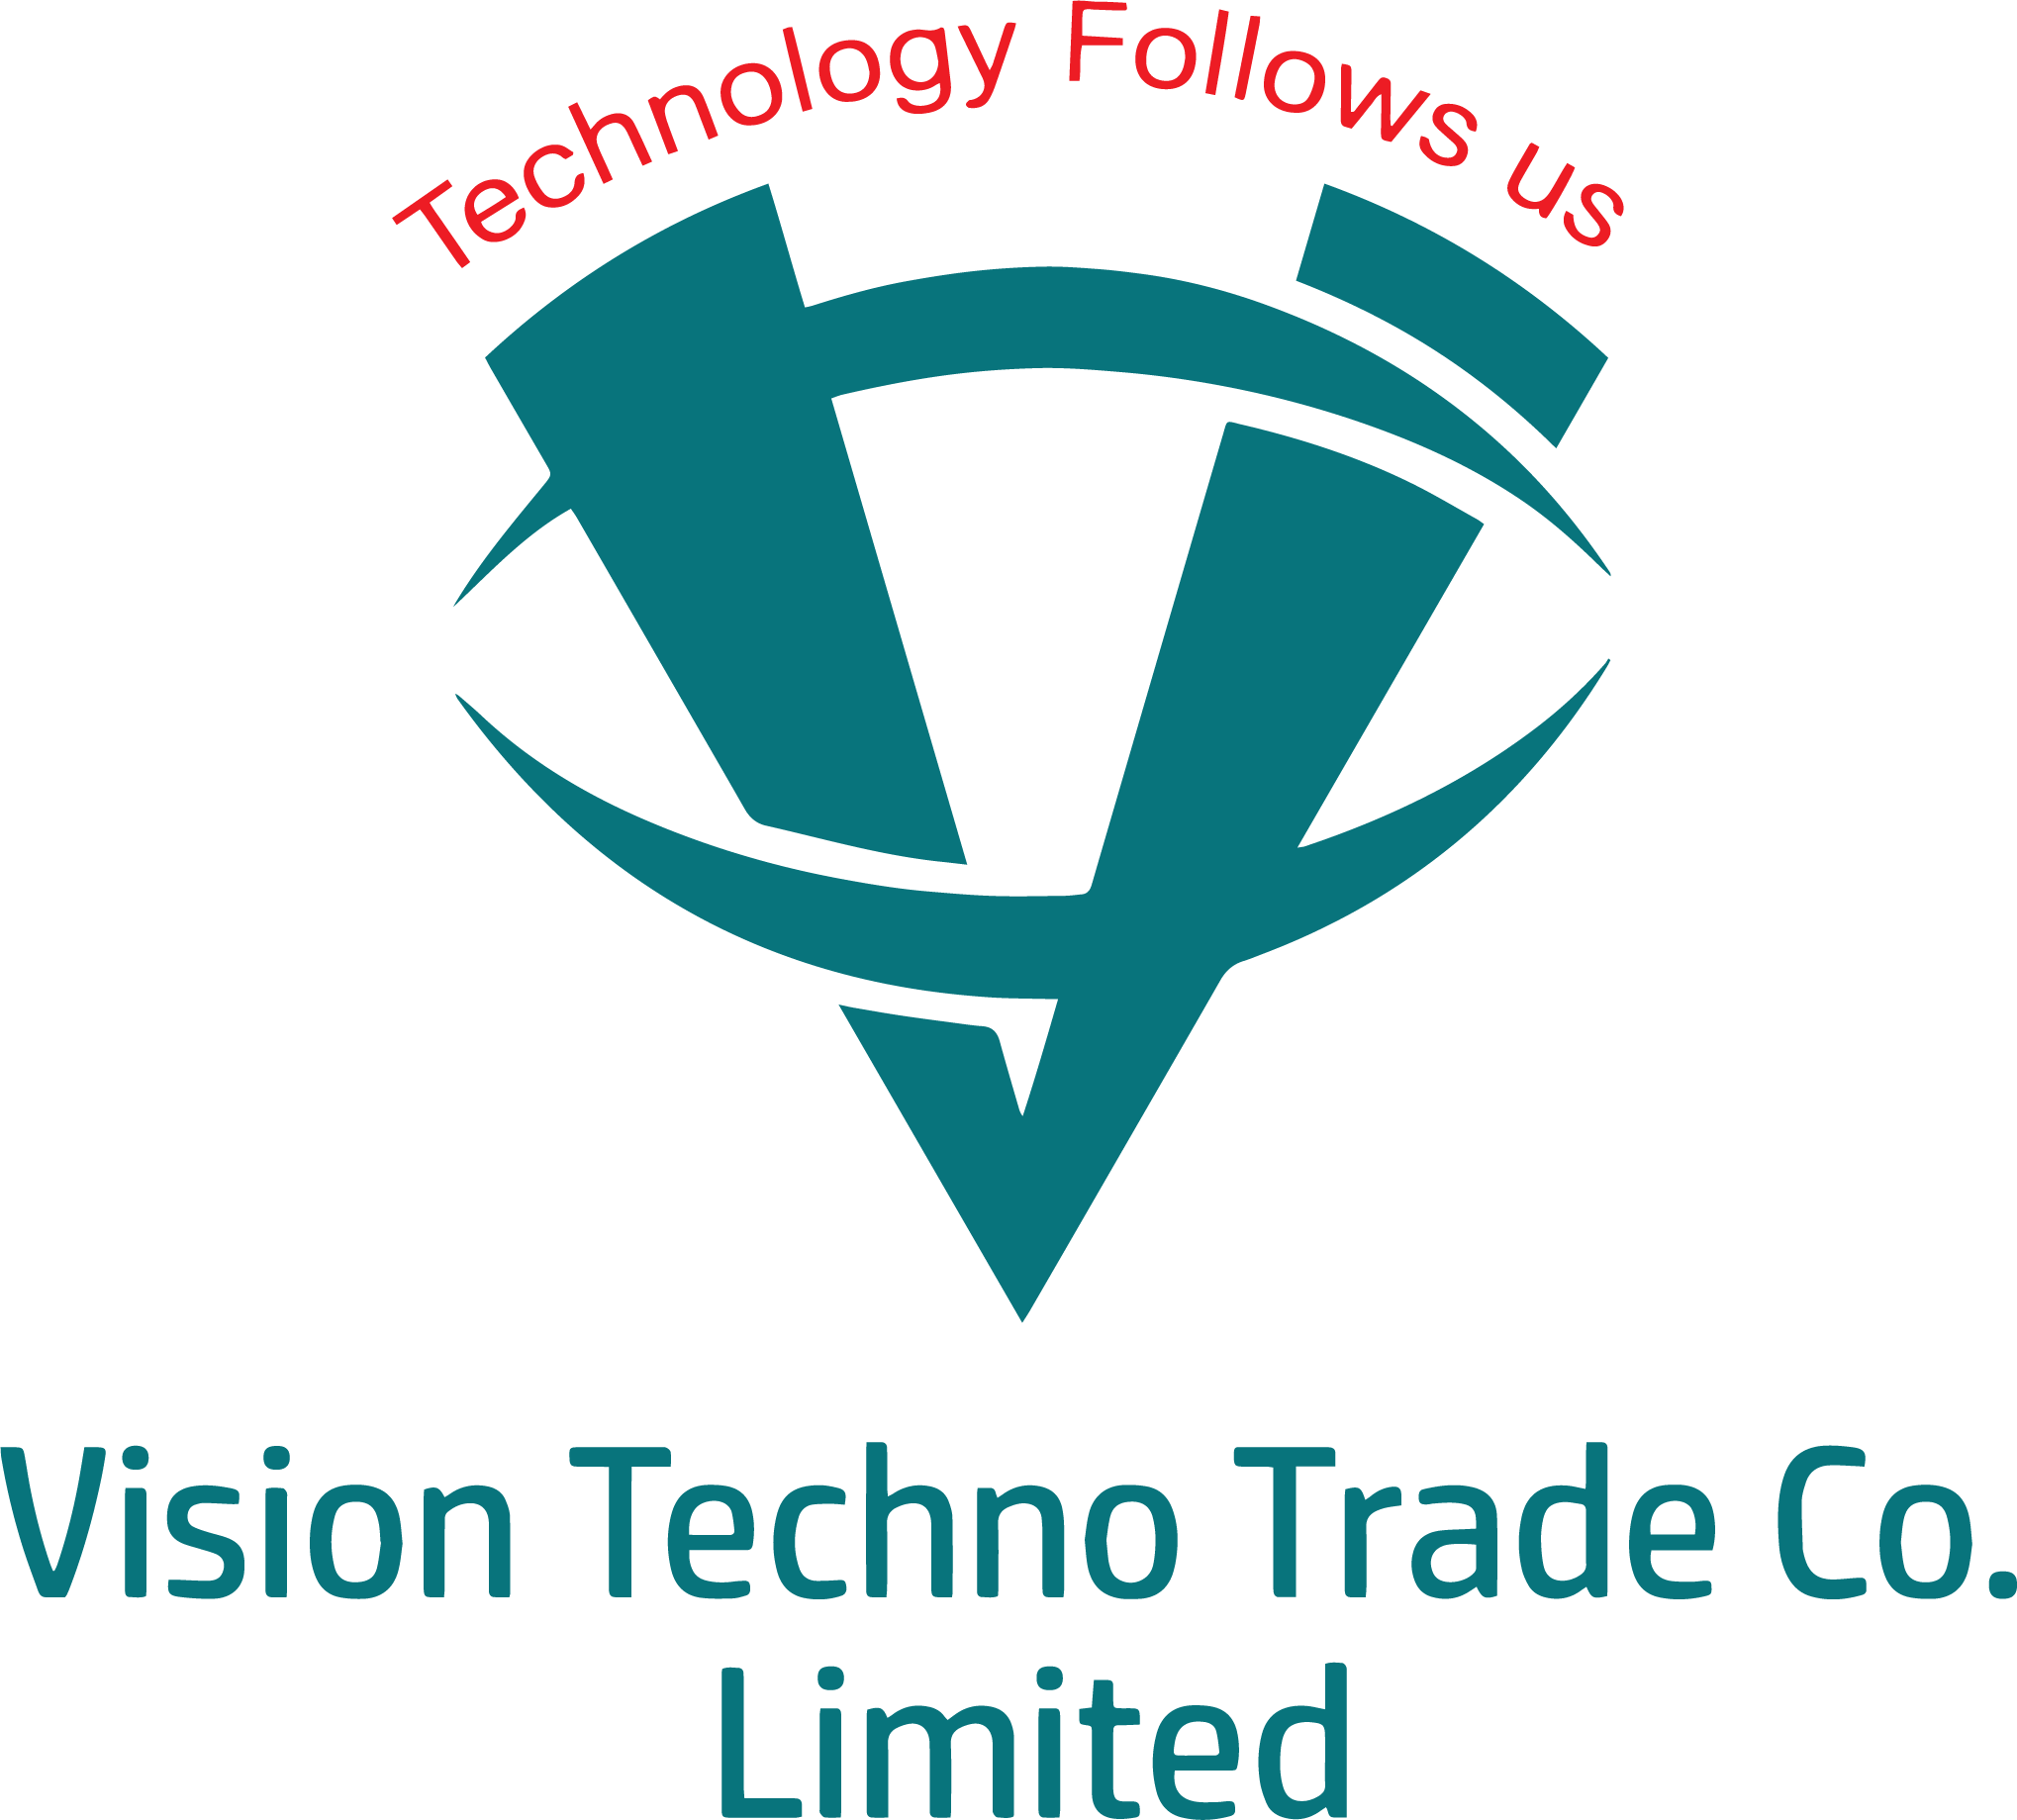 Vision Techno Trade Co. Limited